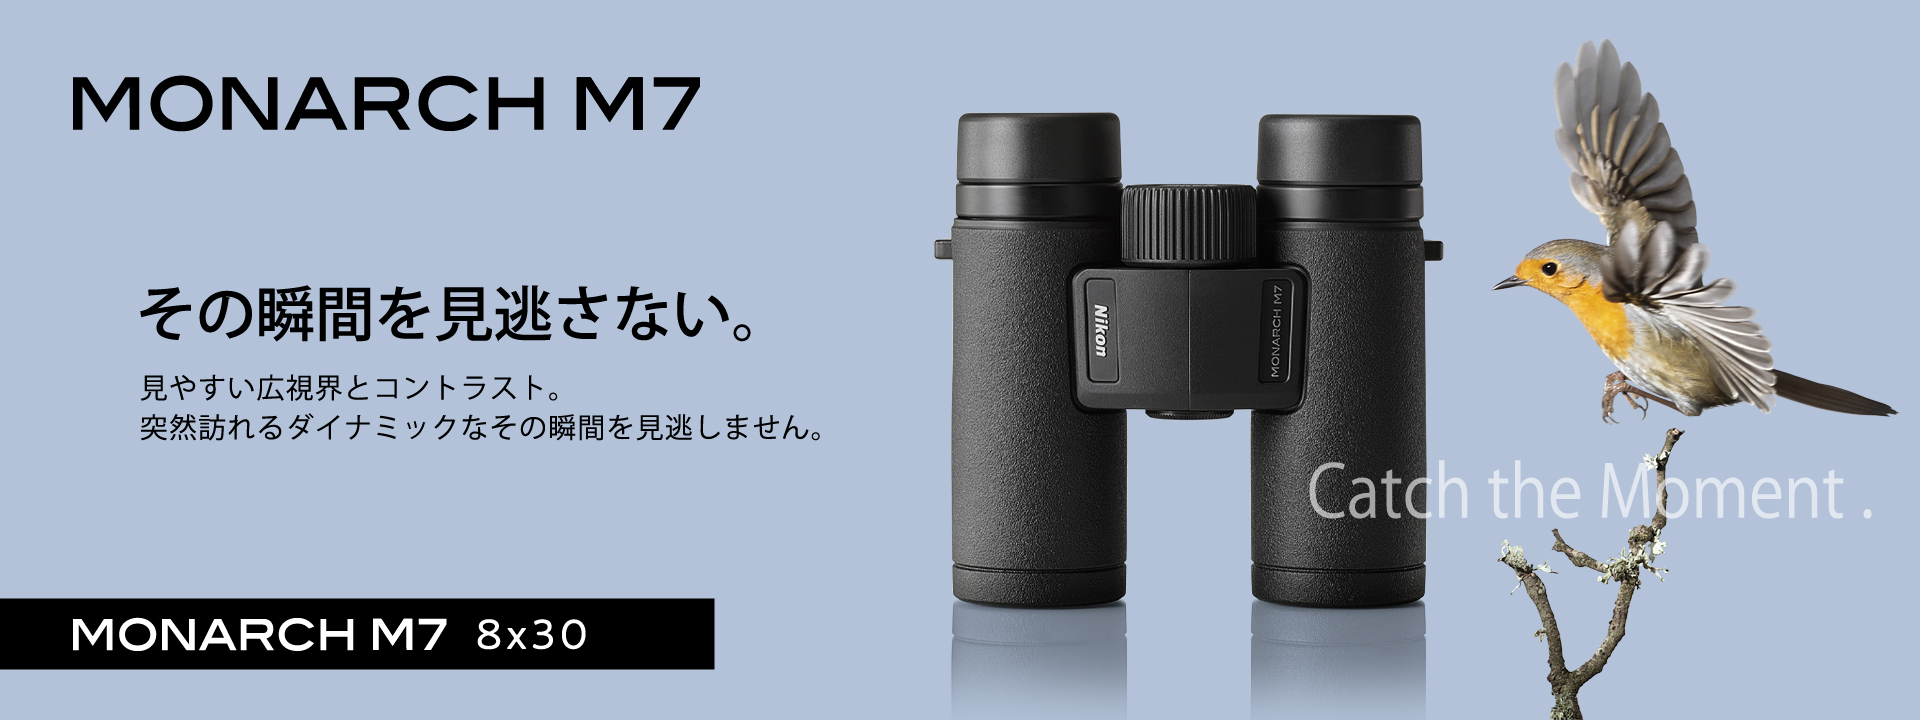 MONARCH M7 8x30